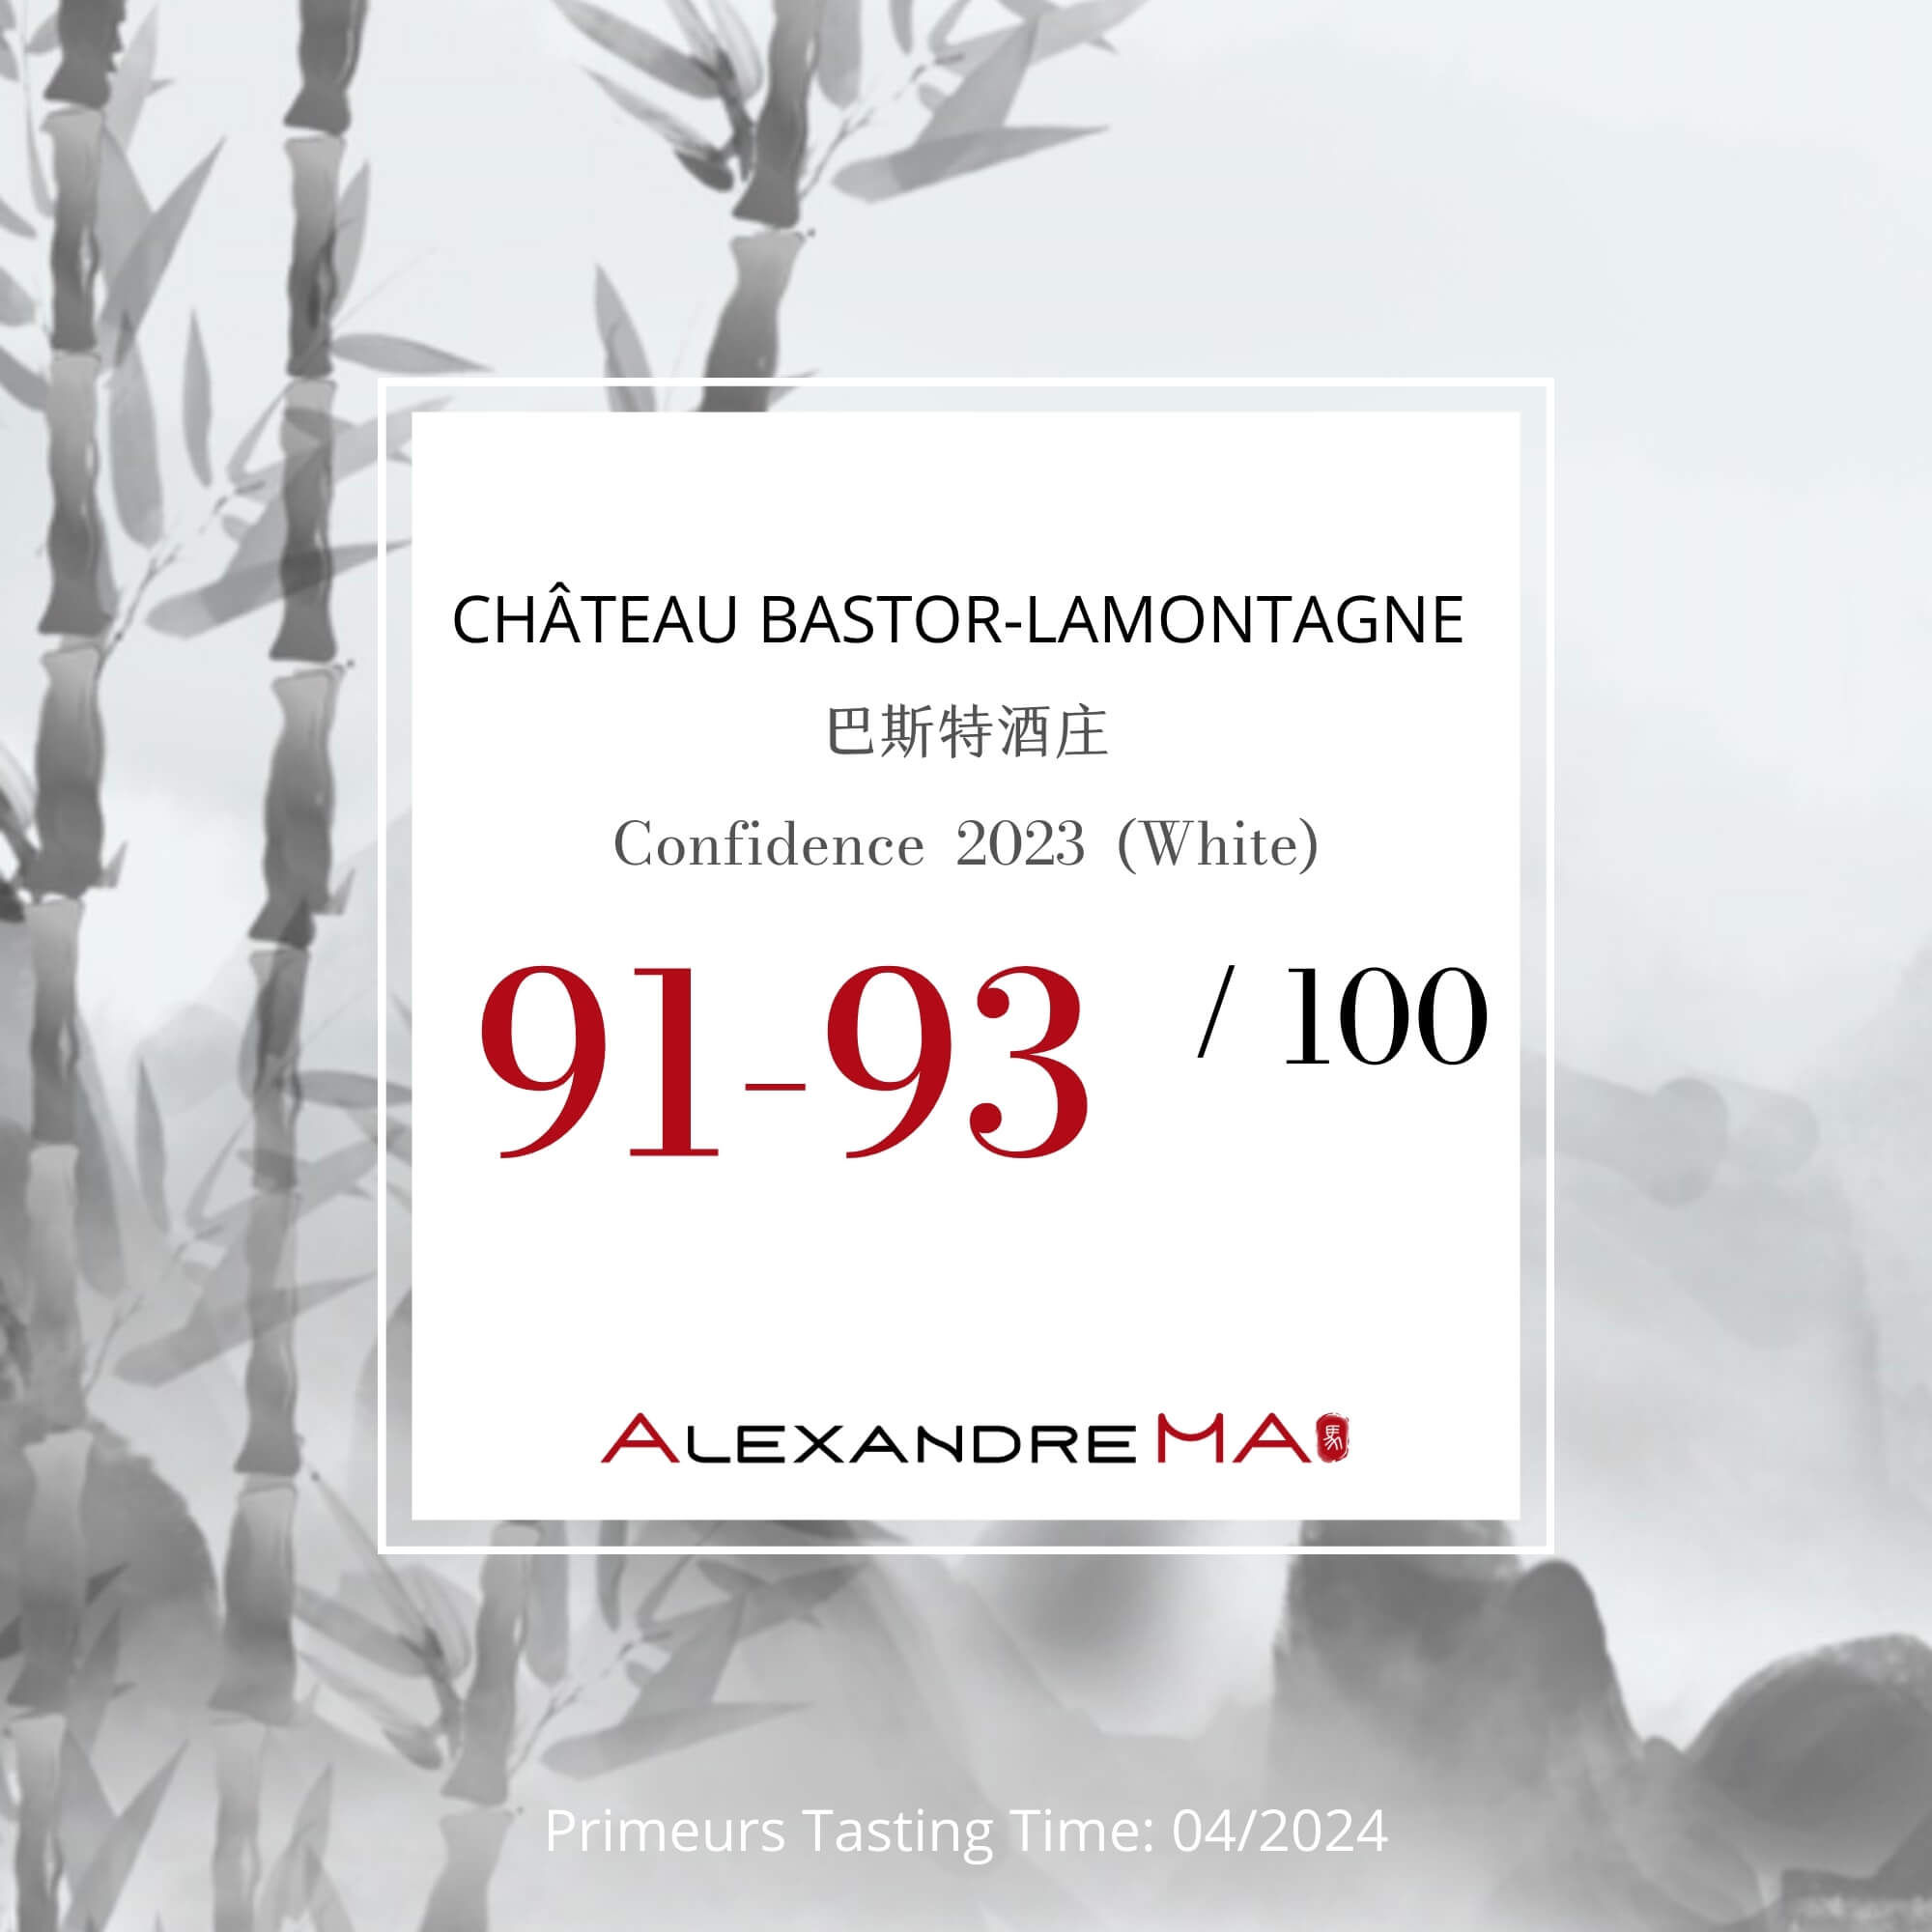 Château Bastor-Lamontagne-Confidence 2023-White Primeurs - Alexandre MA